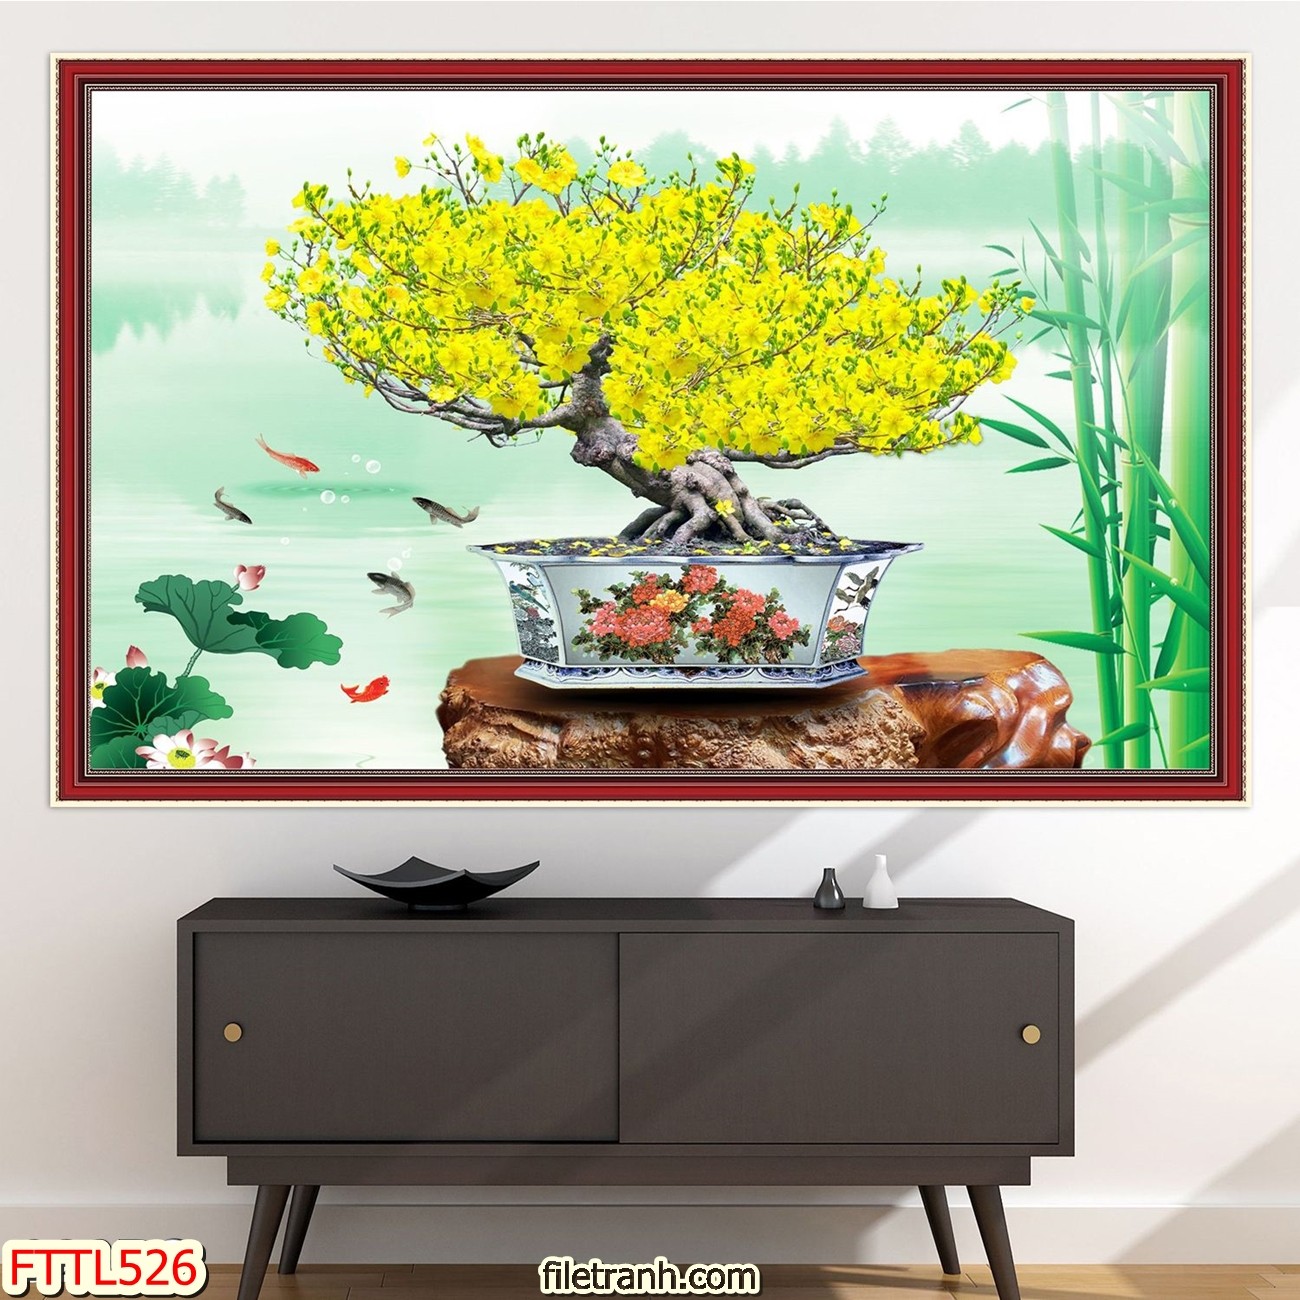 https://filetranh.com/file-tranh-chau-mai-bonsai/file-tranh-chau-mai-bonsai-fttl526.html